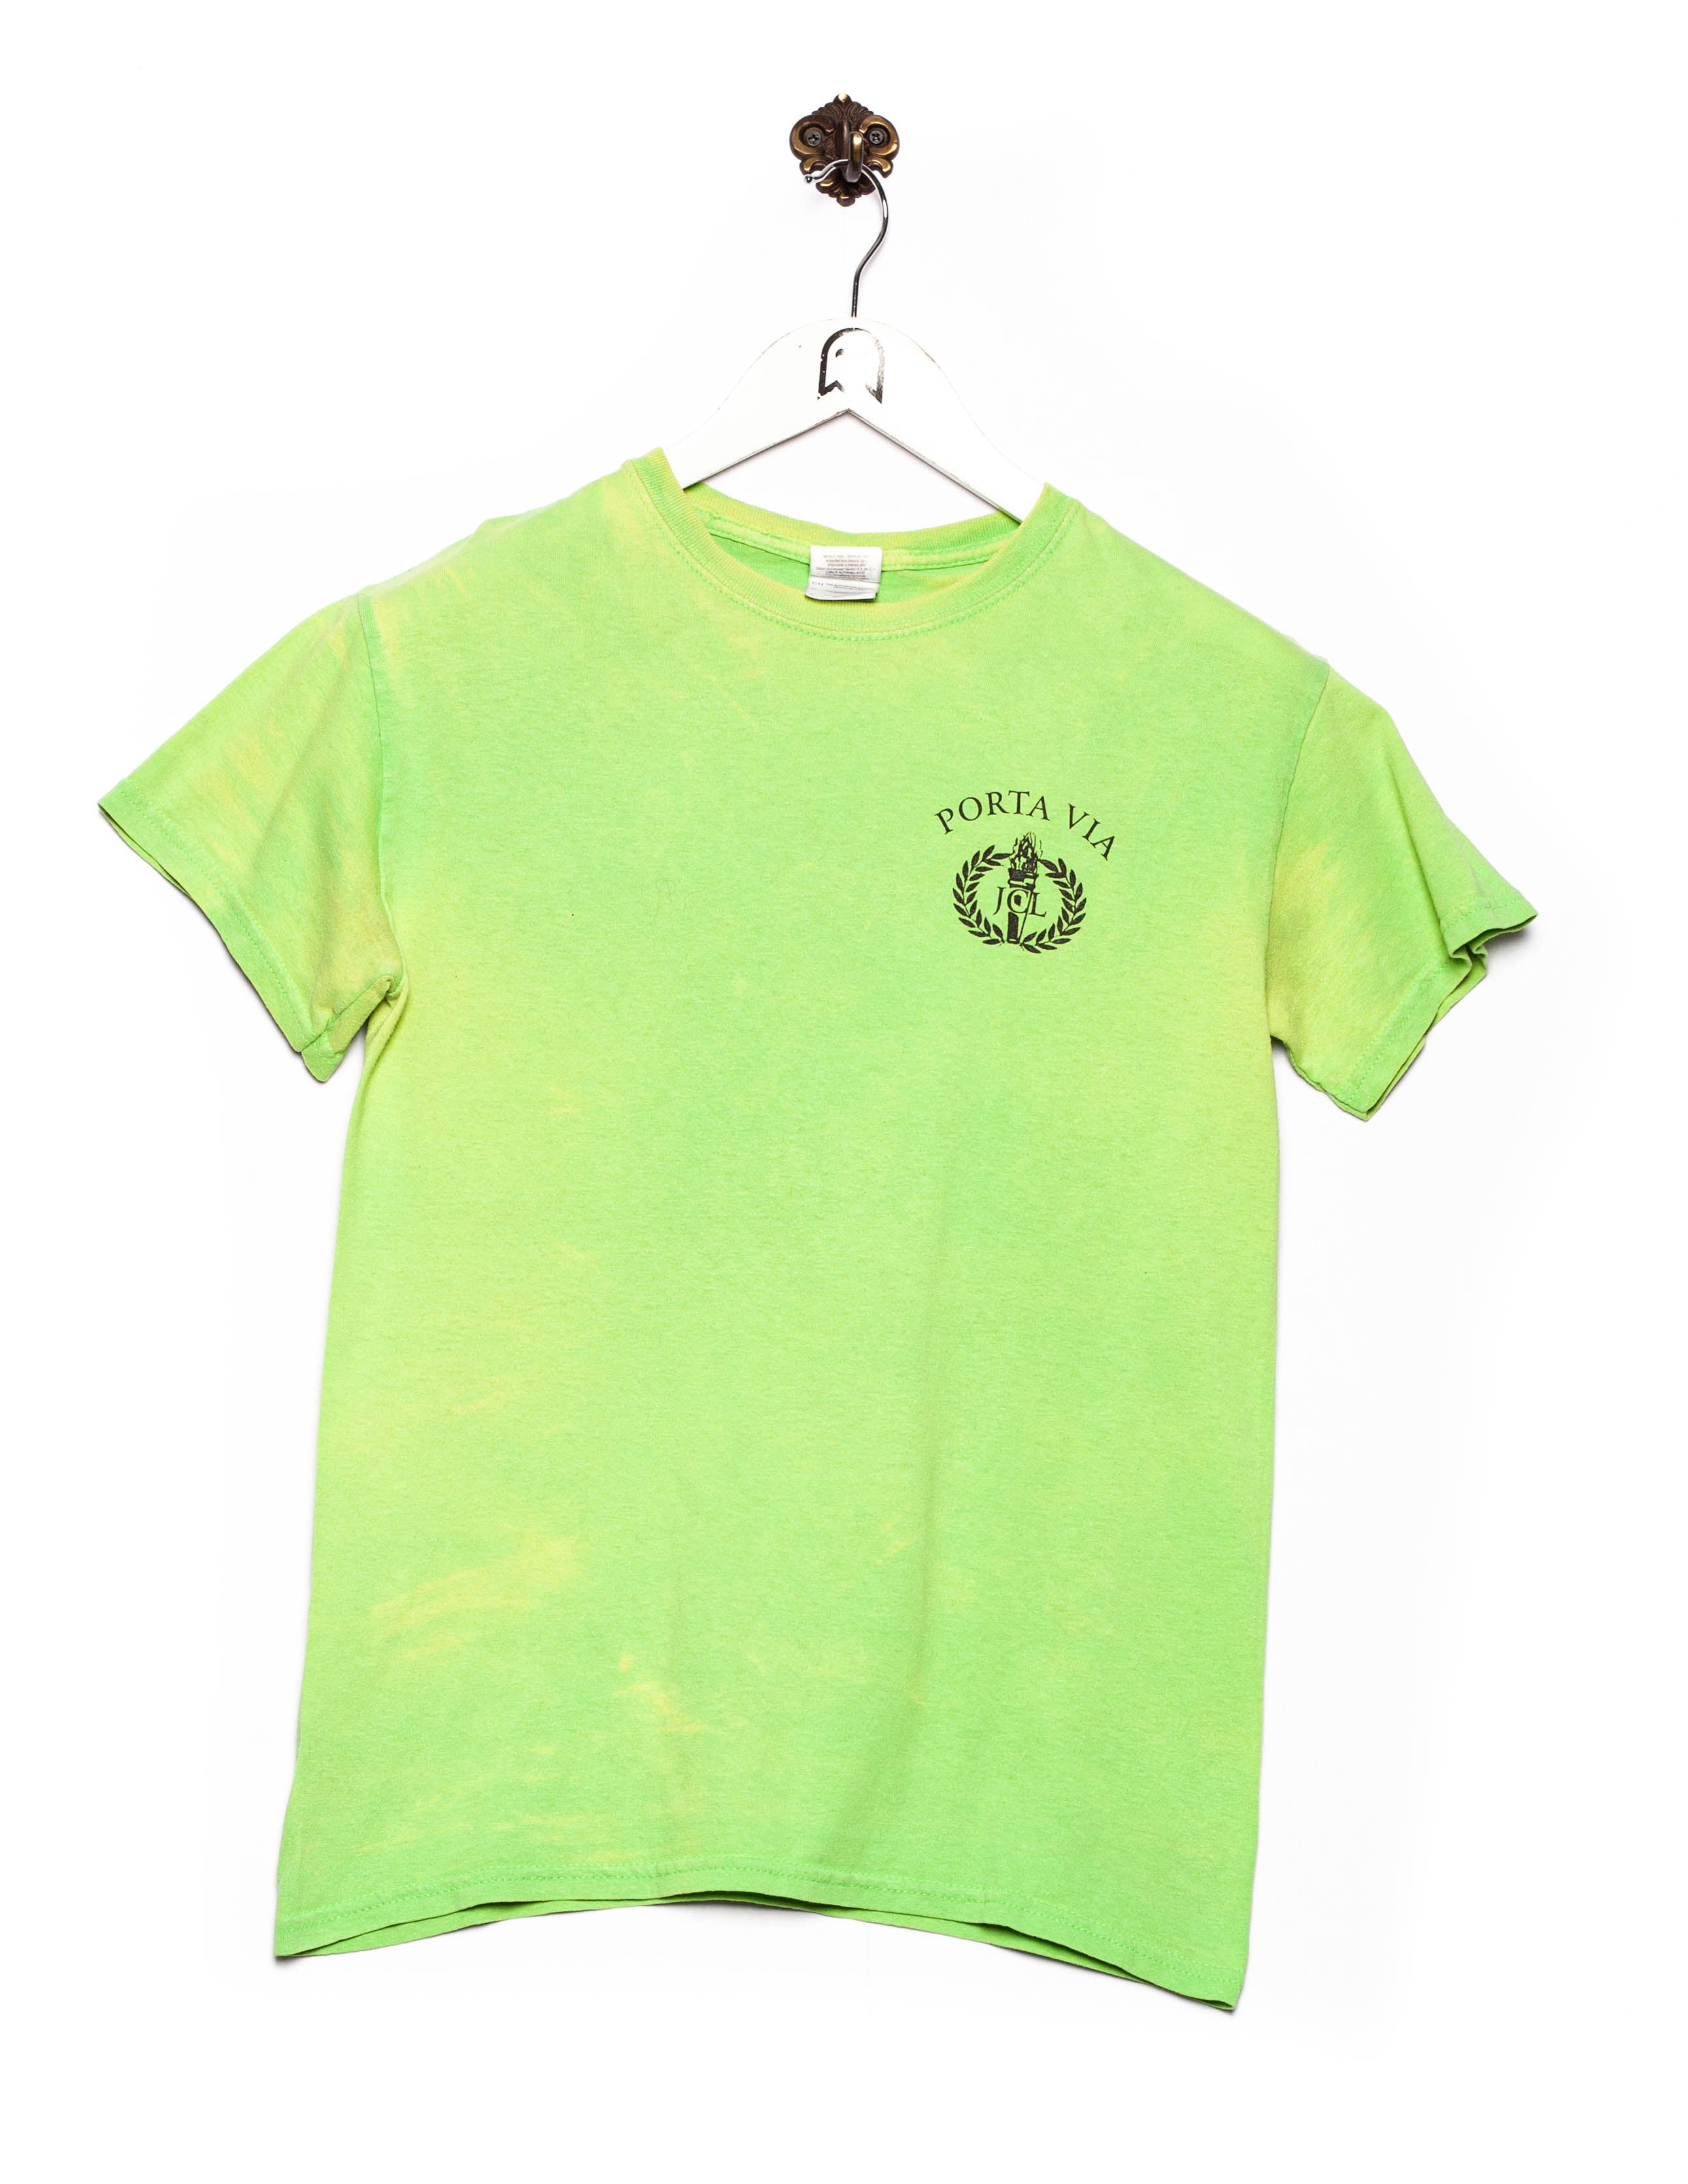 Porta Via Print Green T-shirt Gildan - Zeitgeist Vintage